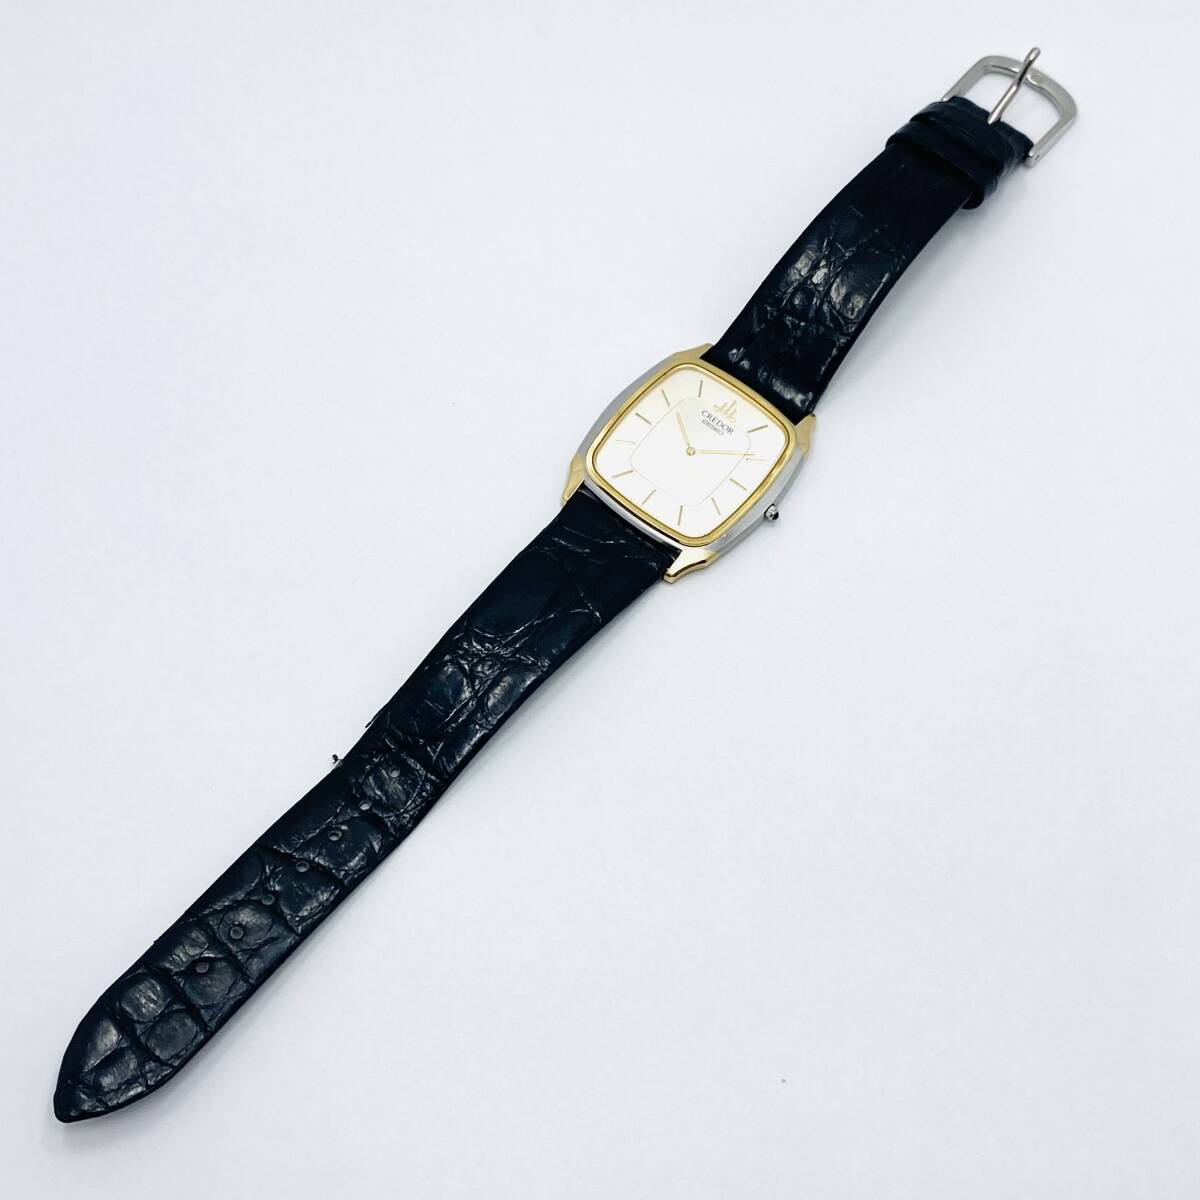 SEIKO セイコー CREDOR クレドール クォーツ腕時計 2F70-5151 YG×SS 14KT刻印 電池交換済み 動作確認済みの画像2